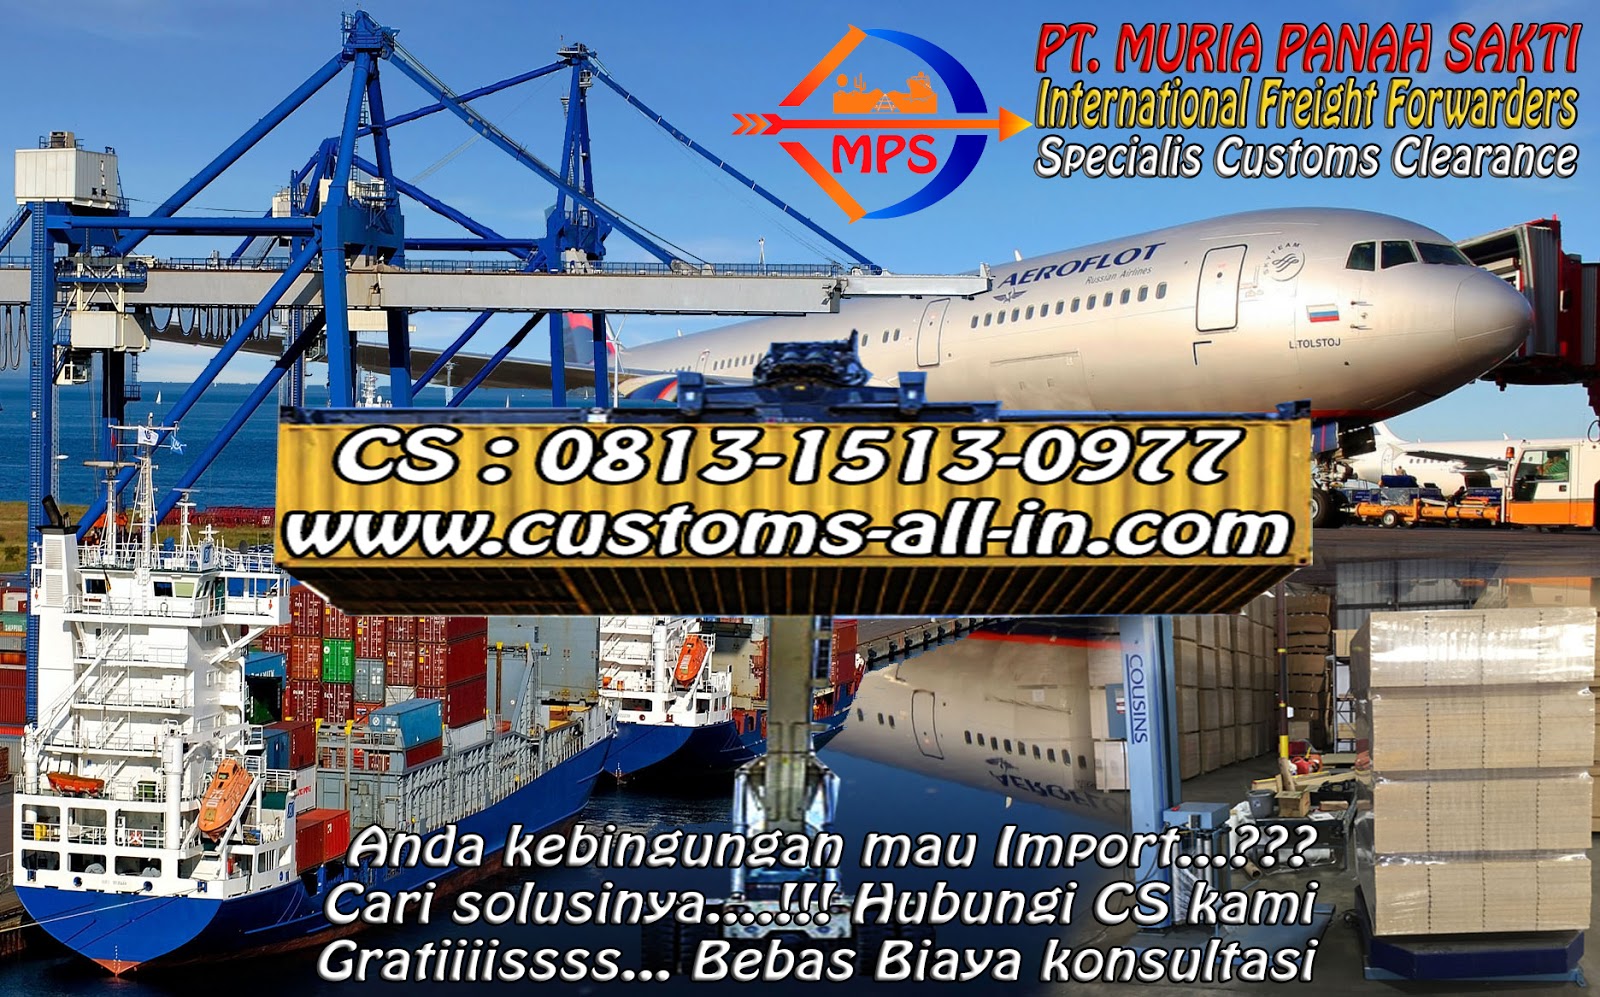 Customs Clearance. Customs Clearance of Cargo. [CN hzsgjhhj] Import Customs Clearance complete. Import clearance перевод